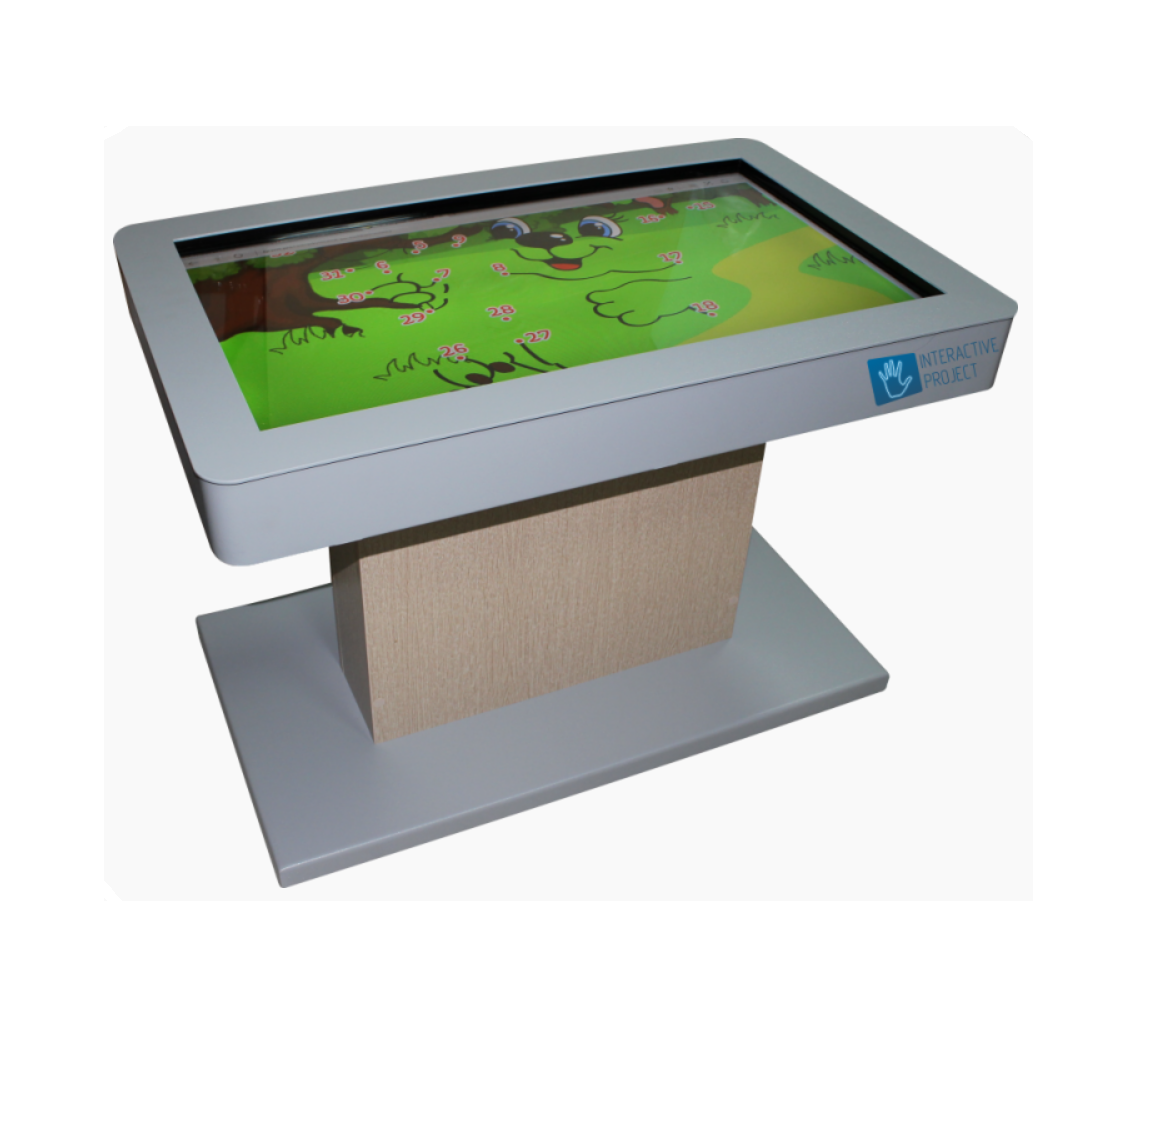 Votum-Table 32 интерактивный стол